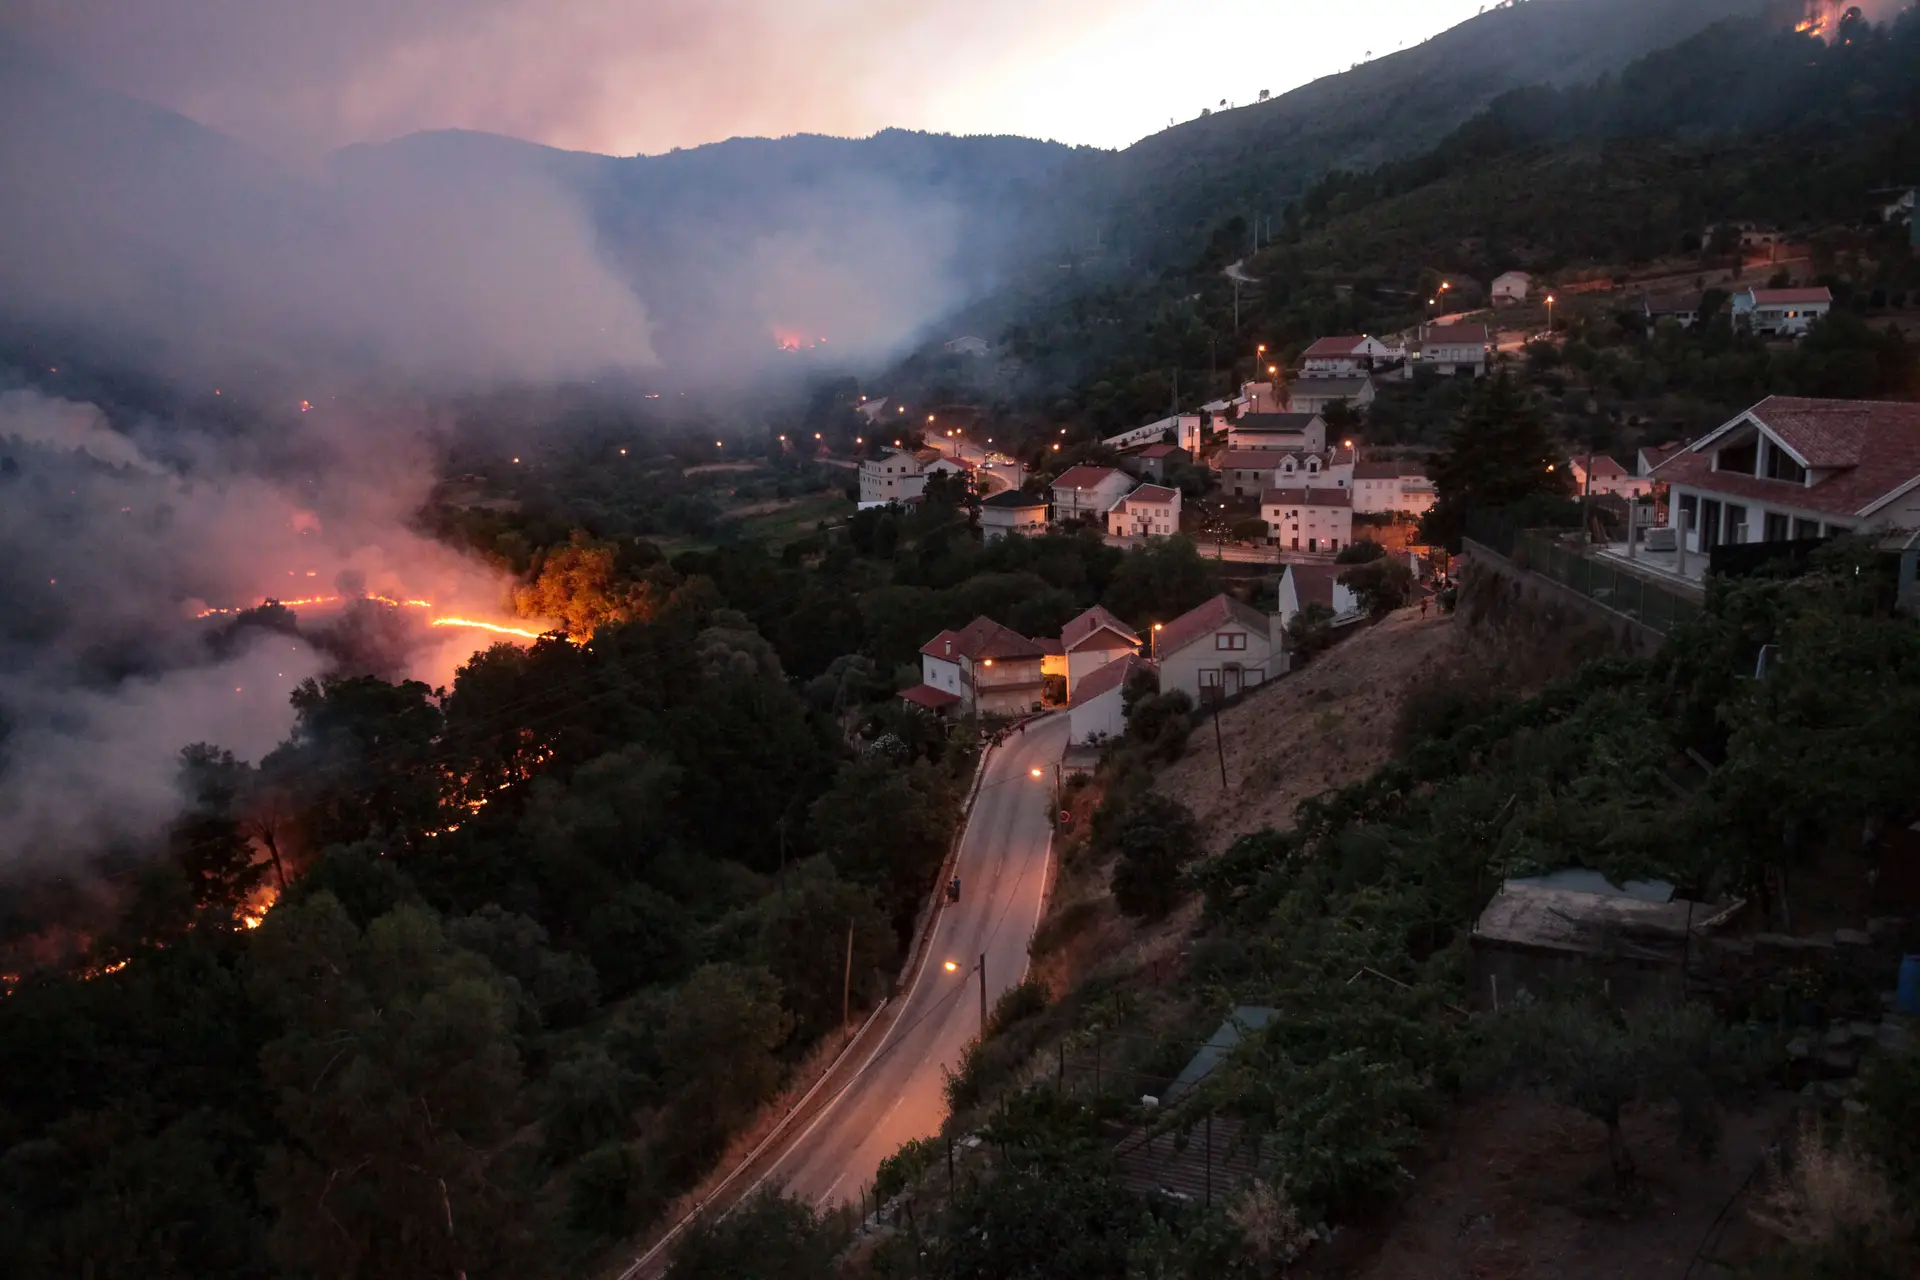 PJ suspeita de fogo posto no incêndio da Serra da Estrela